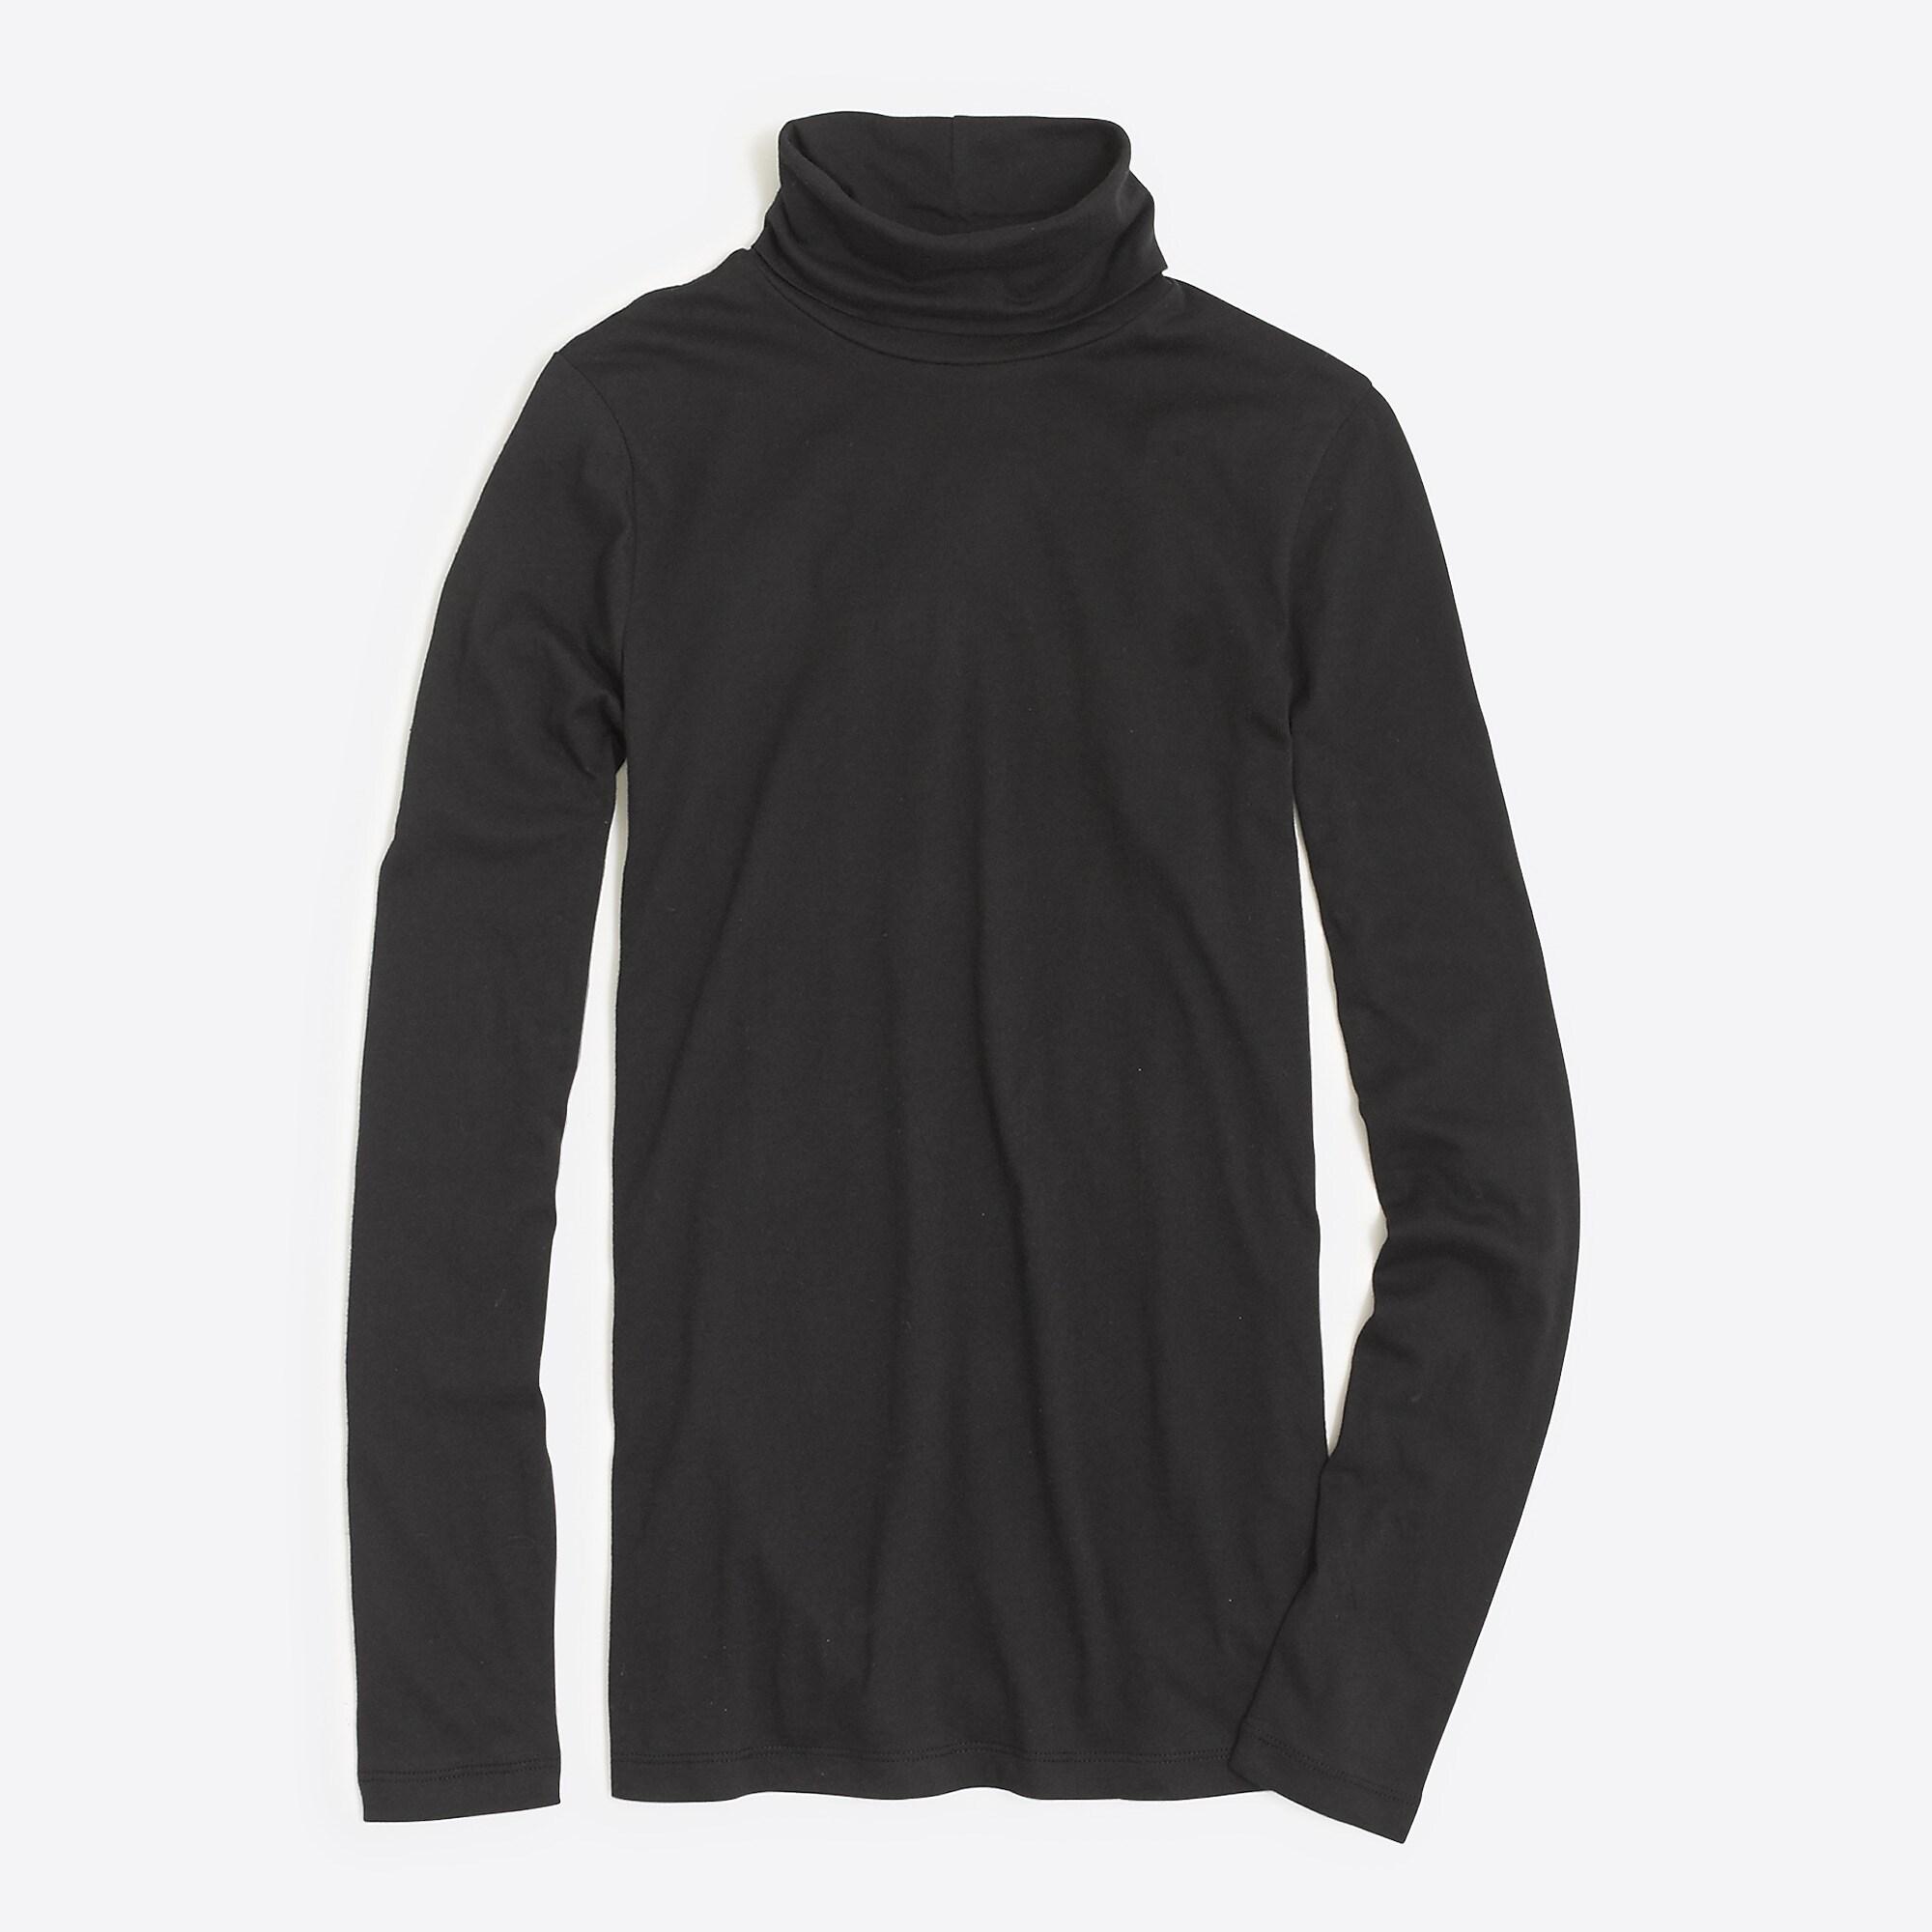 J crew tissue turtleneck black shirt design secret quality online – A ...